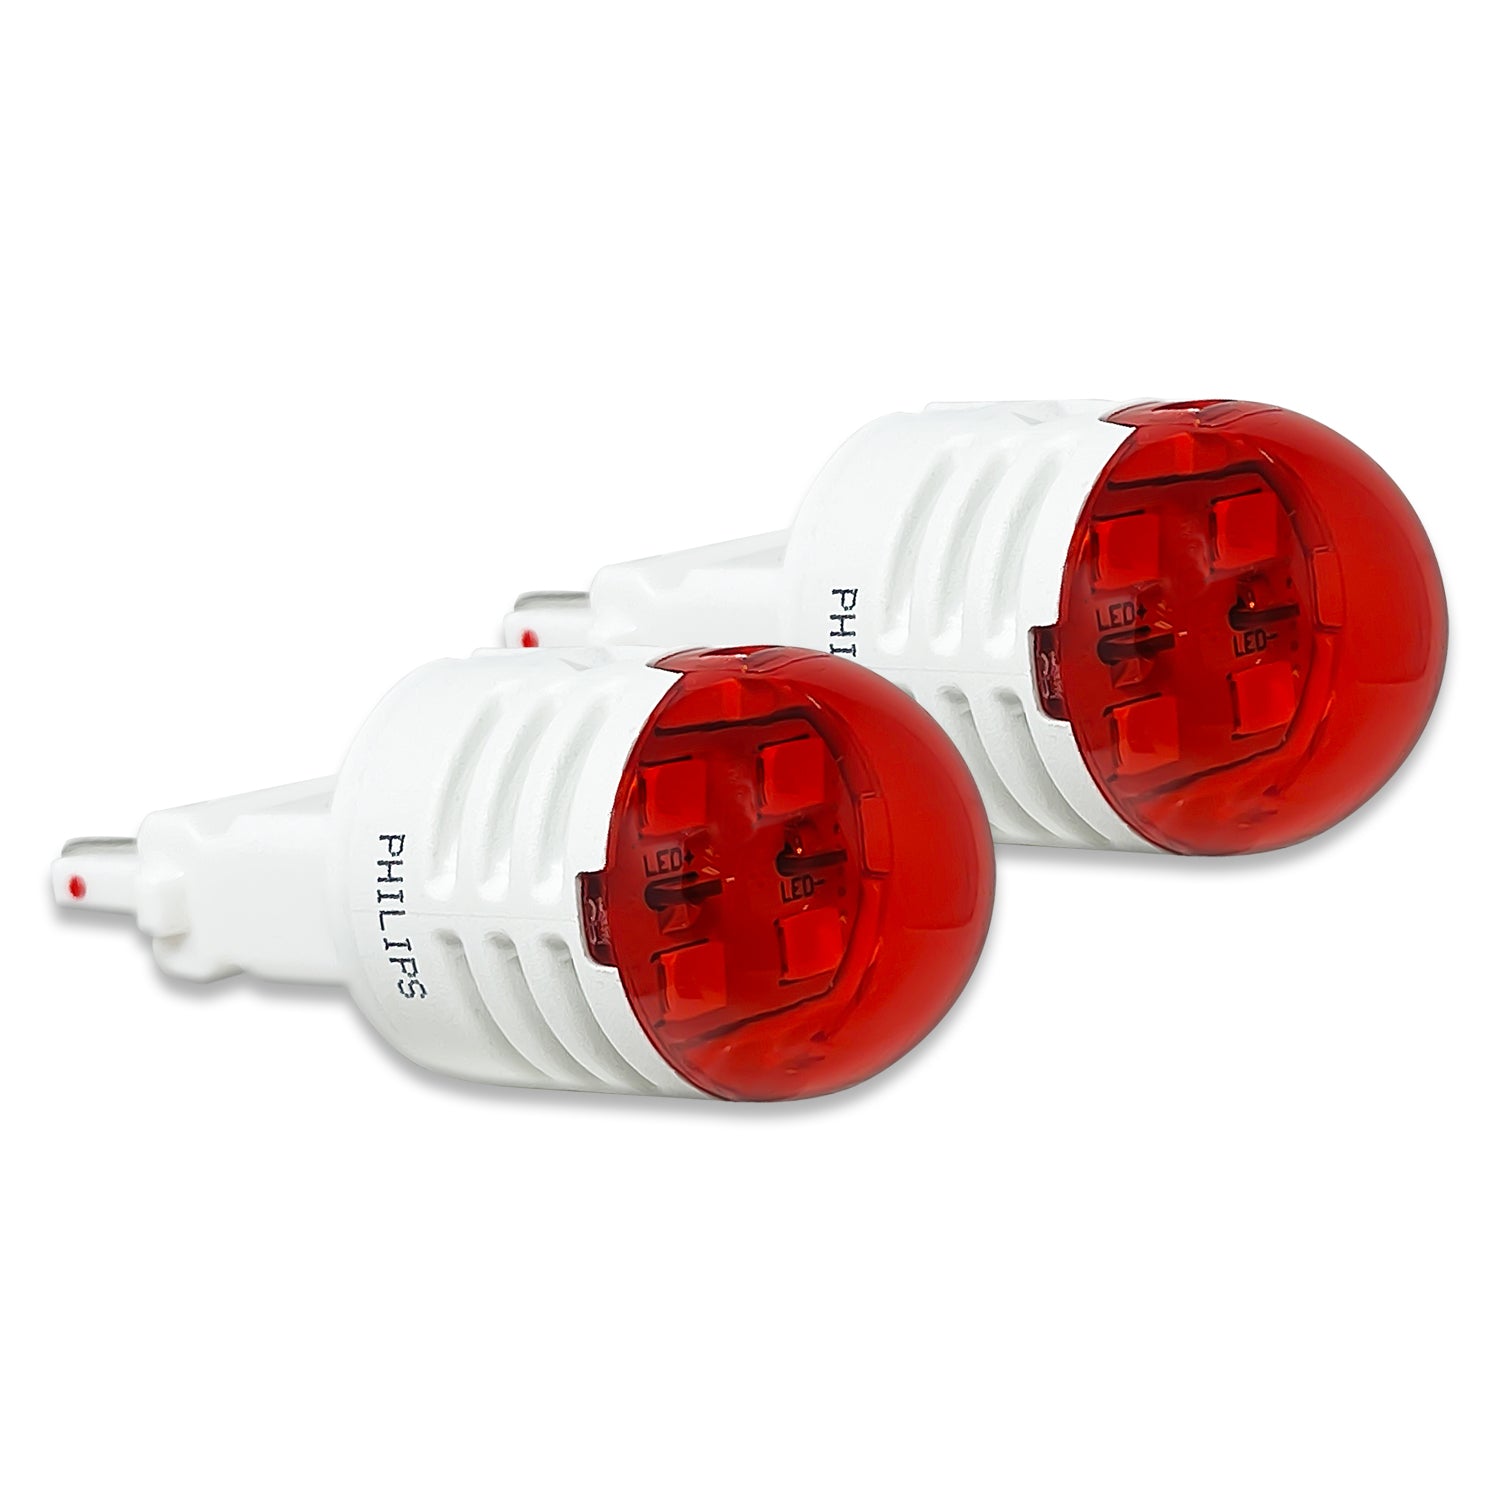 Philips Ultinon LED 3157 Miniature Automotive Signaling Bulb (Pack of 2), S-8 LED 3157 ULW